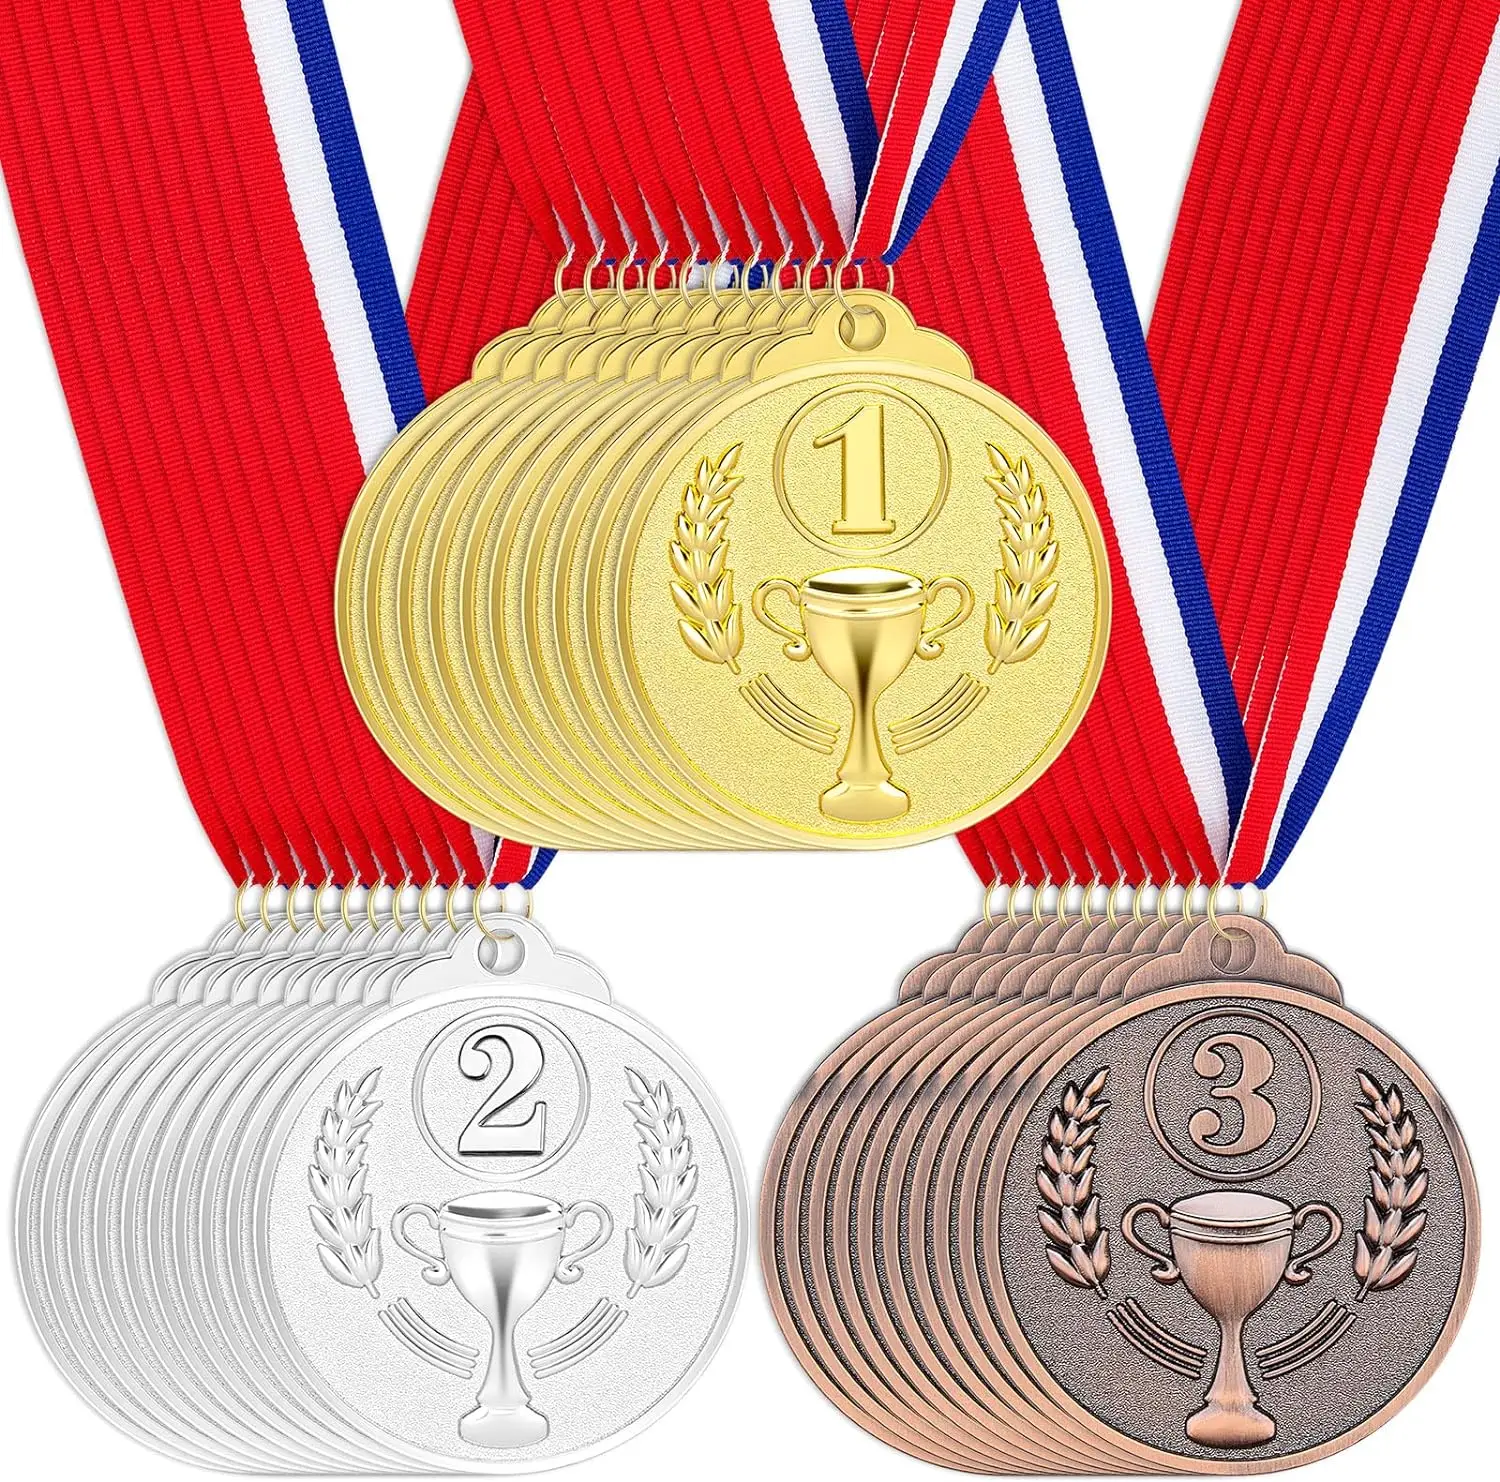 5Pcs Winner medaglie Golden Silver Bronze Award 1st 2nd 3rd premi per le gare School Soccer Sports Winner Prize Presents